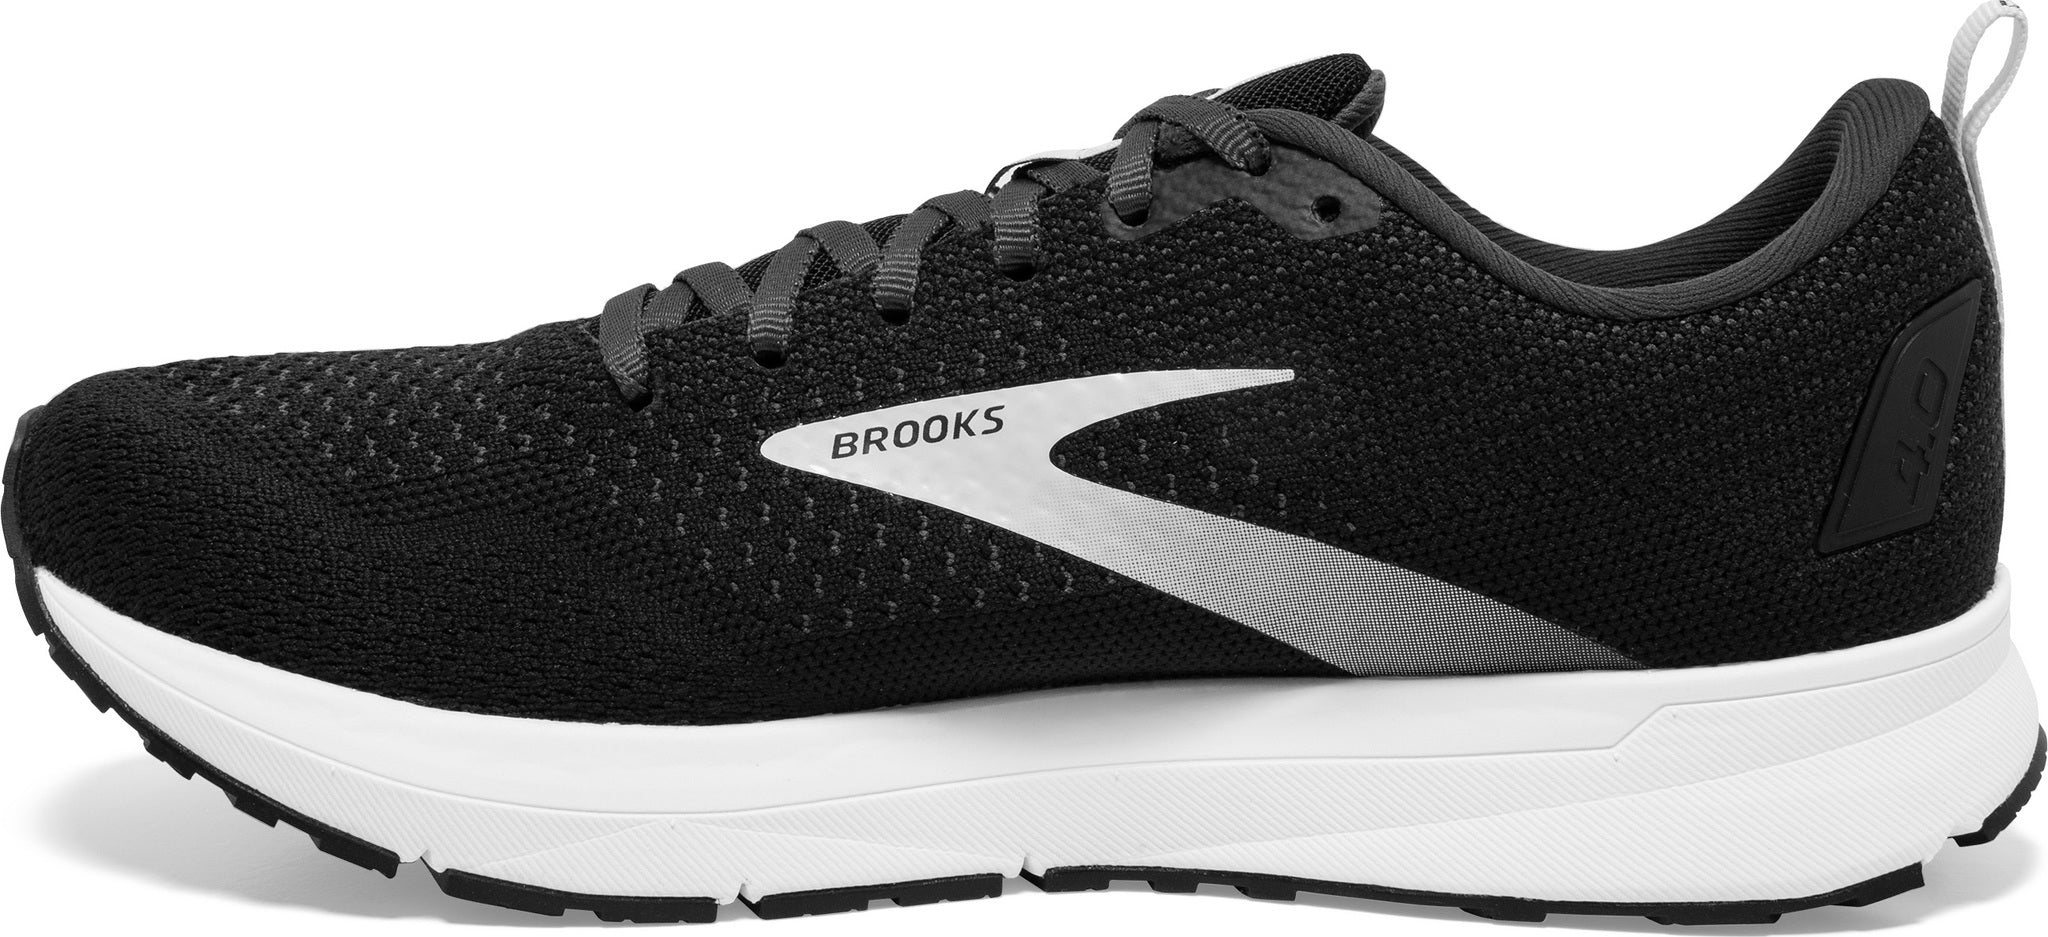 brooks revel running shoe